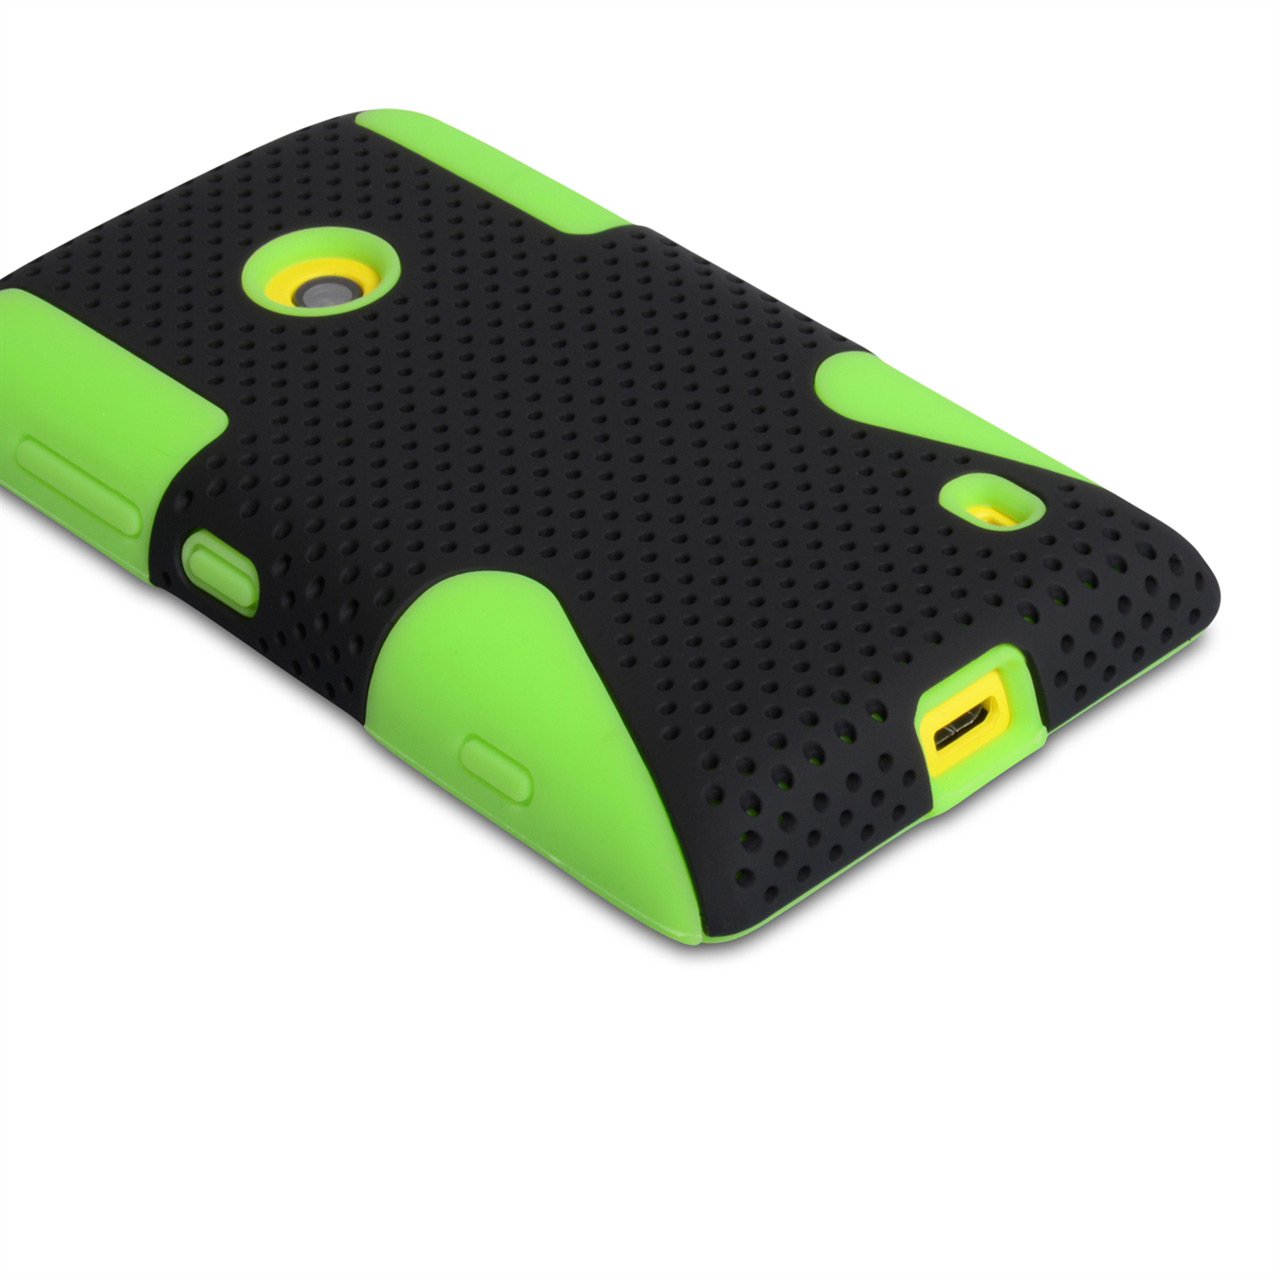 YouSave Accessories Nokia Lumia 520 Mesh Combo Case - Green